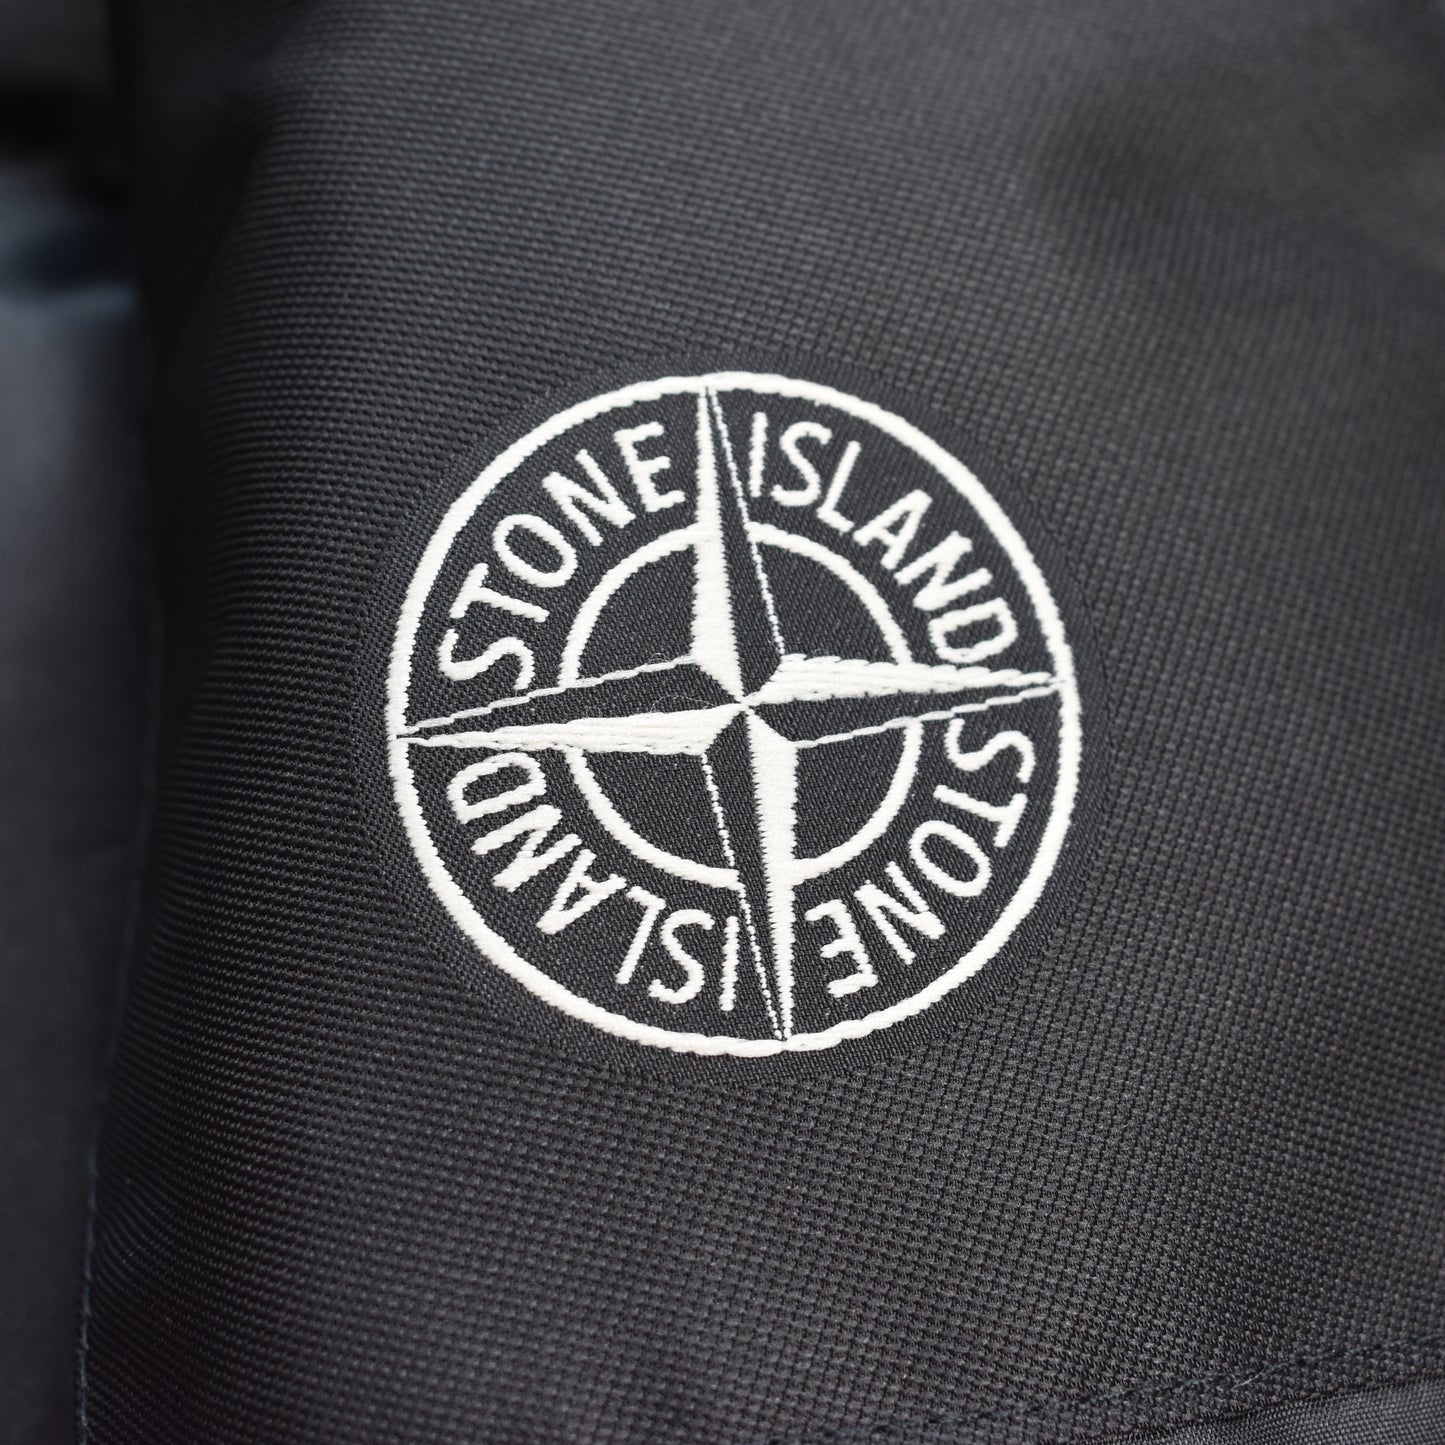 Supreme x Stone Island - Copper Floral Puffy Jacket